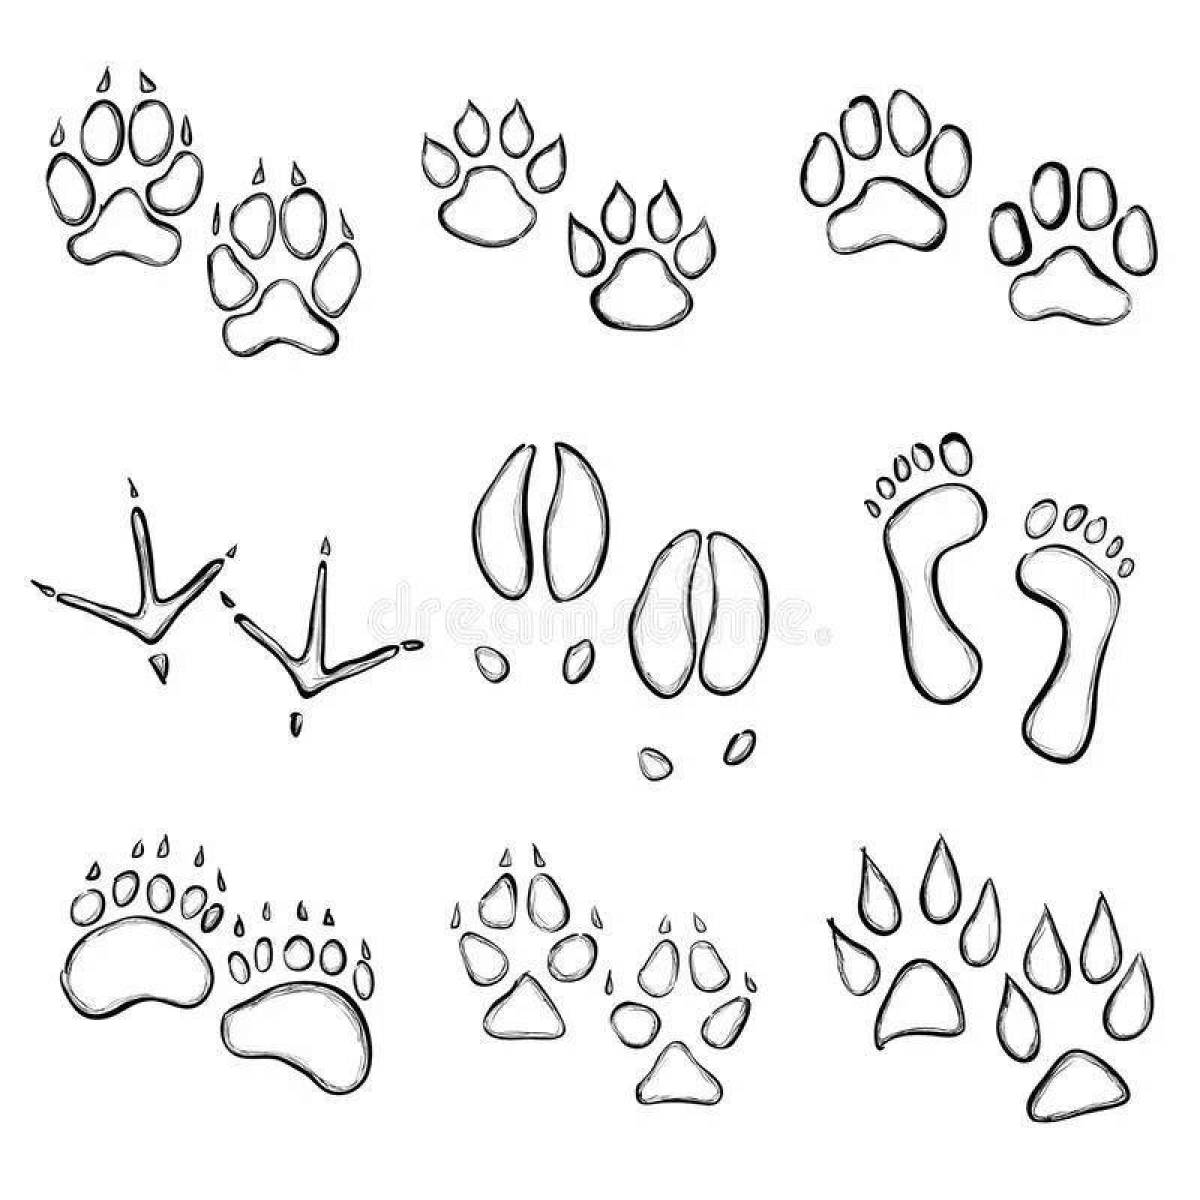 Color-fantastic animal footprints coloring page